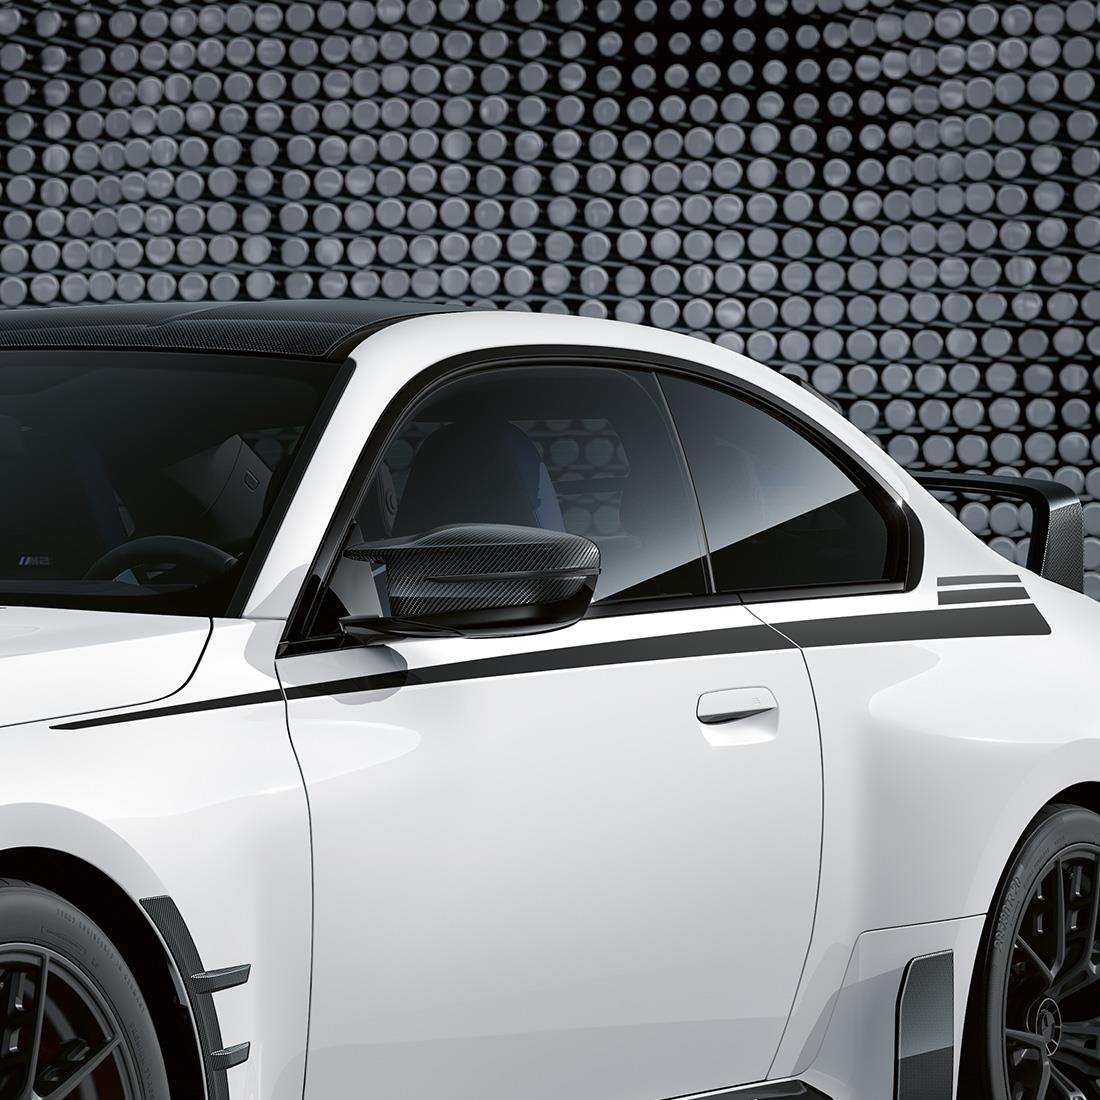 2 PCS Car Sticker For BMW M Performance Auto Bumper Decal White Black  Limited Vi